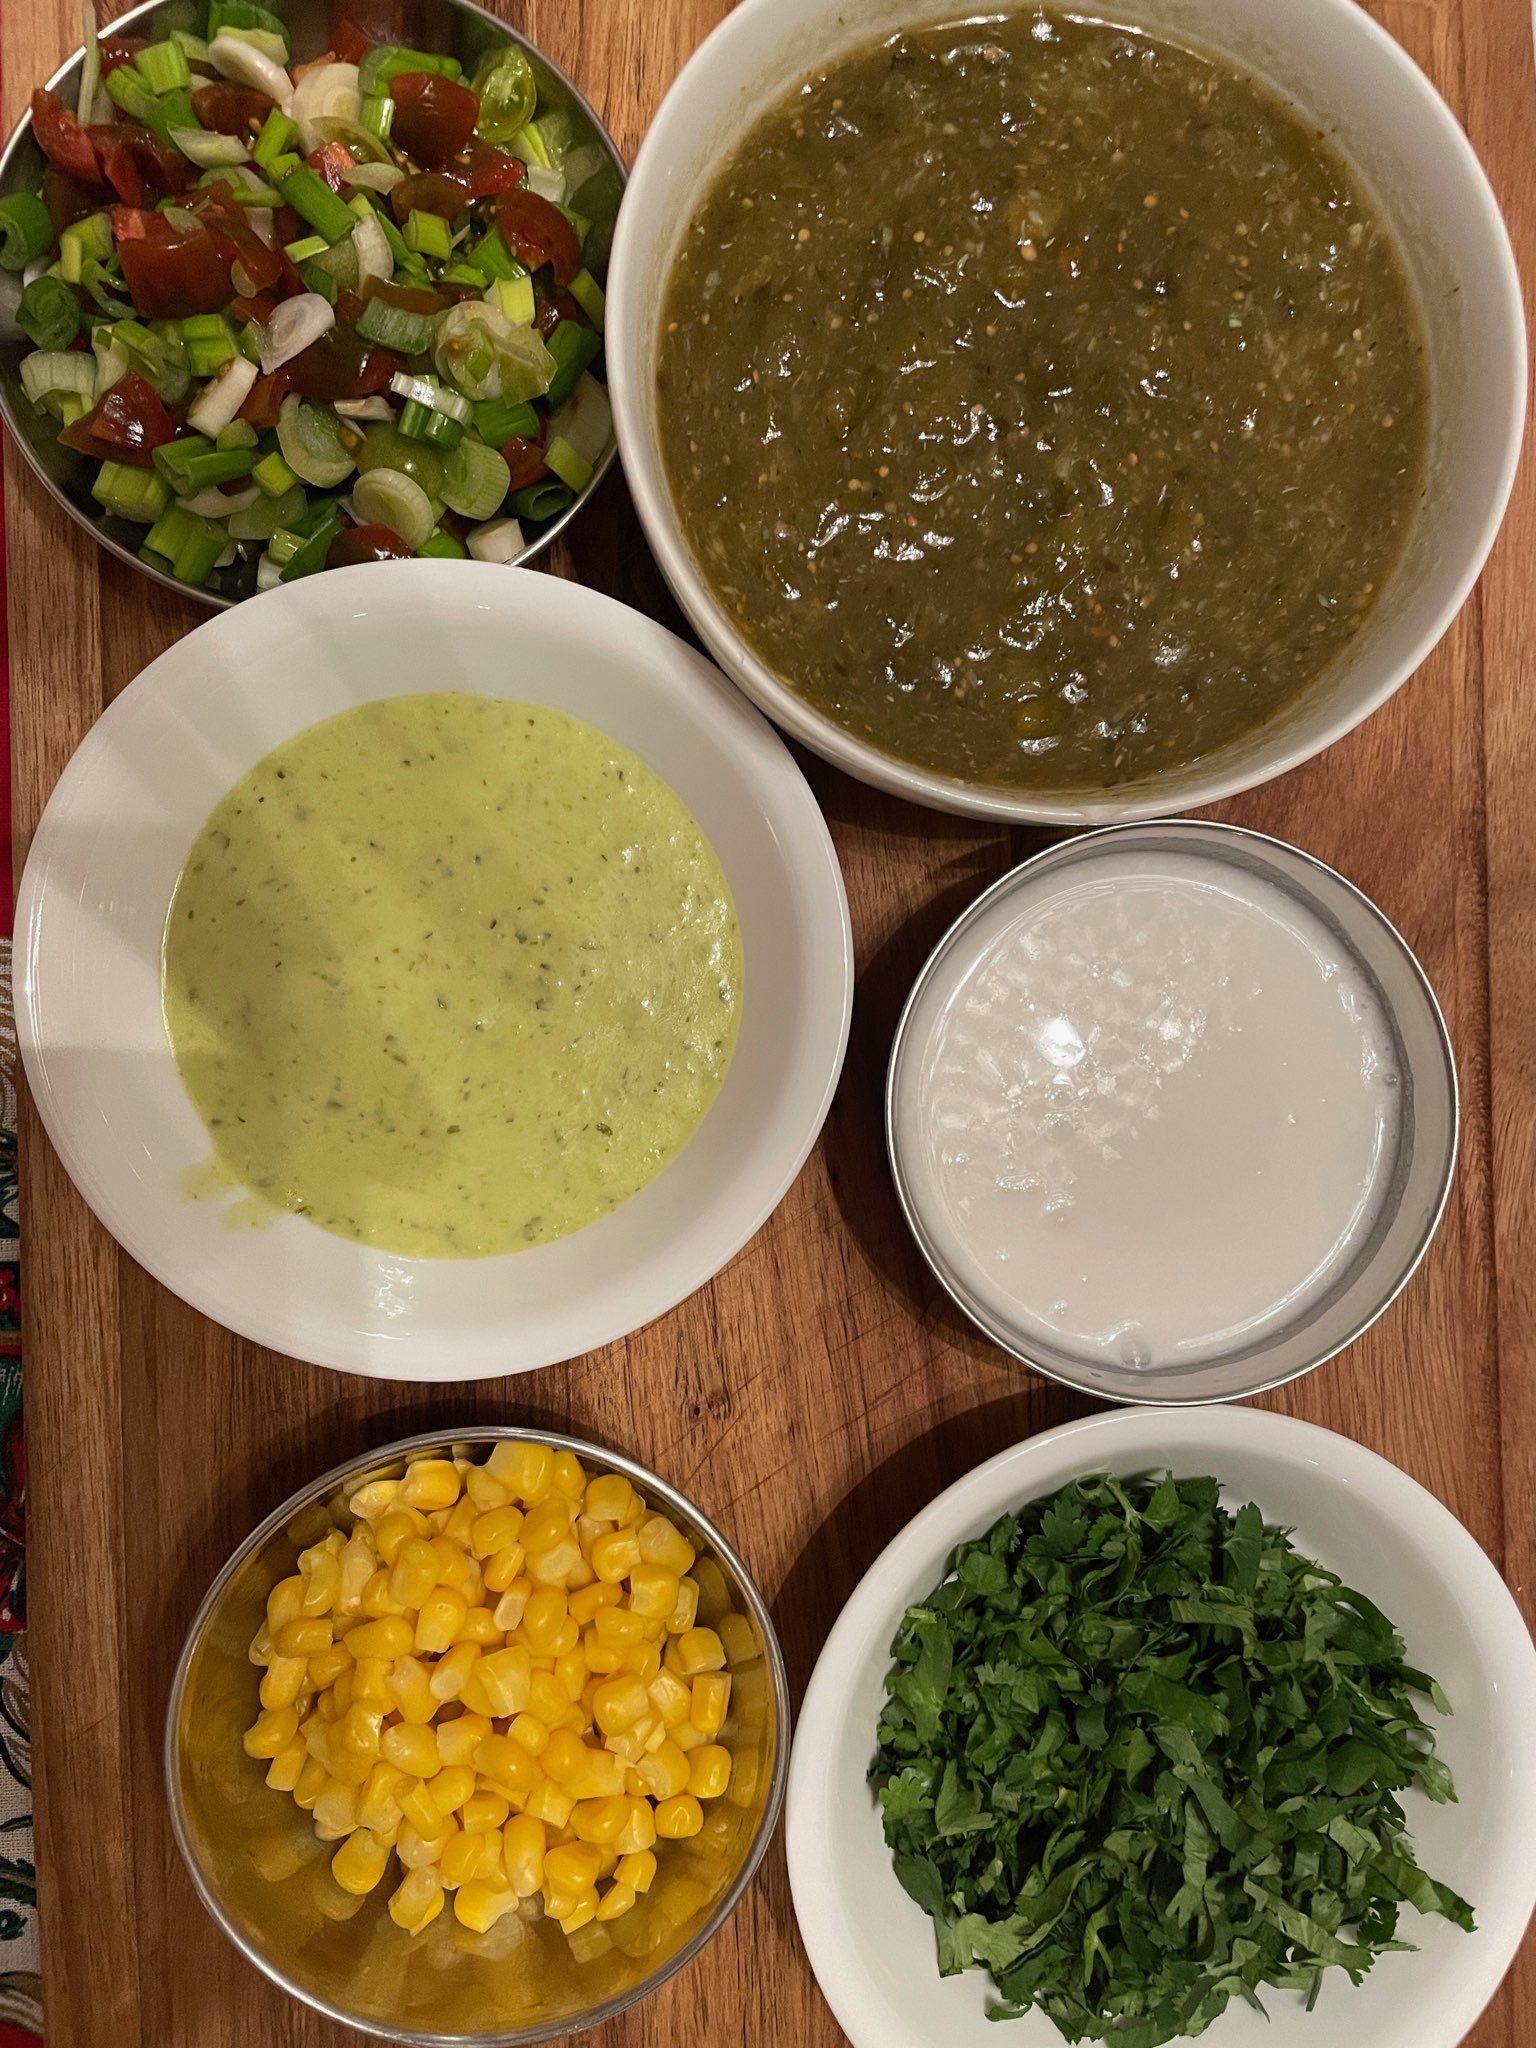 Ingredients for Vegan Enchilada